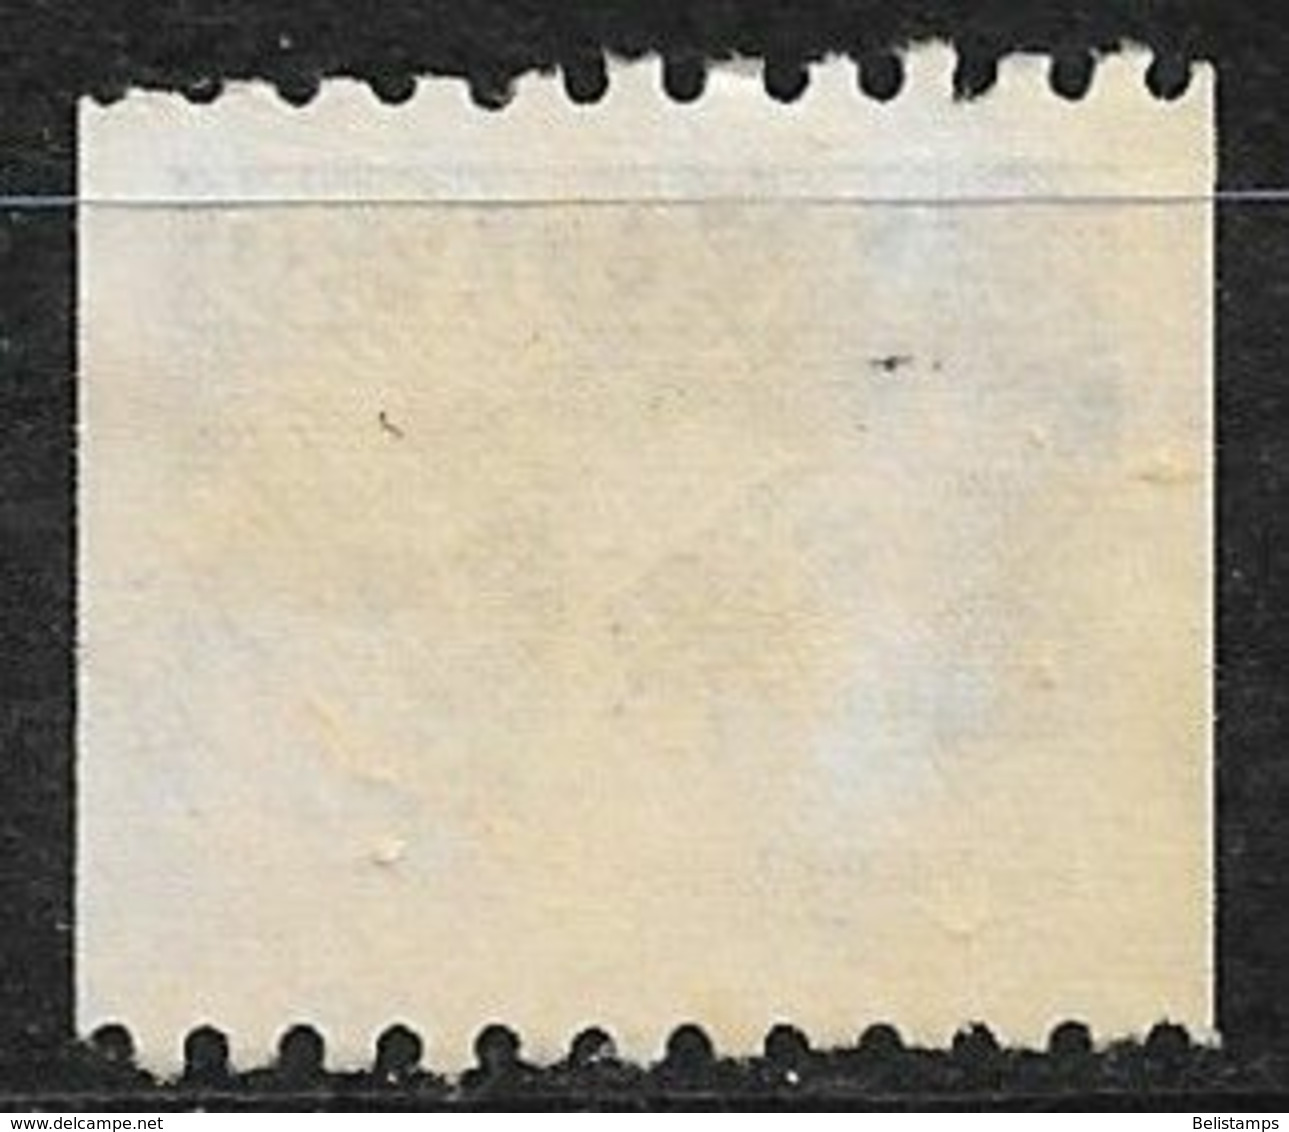 Canada 1990. Scott #1194B (U) Canadian Flag - Coil Stamps